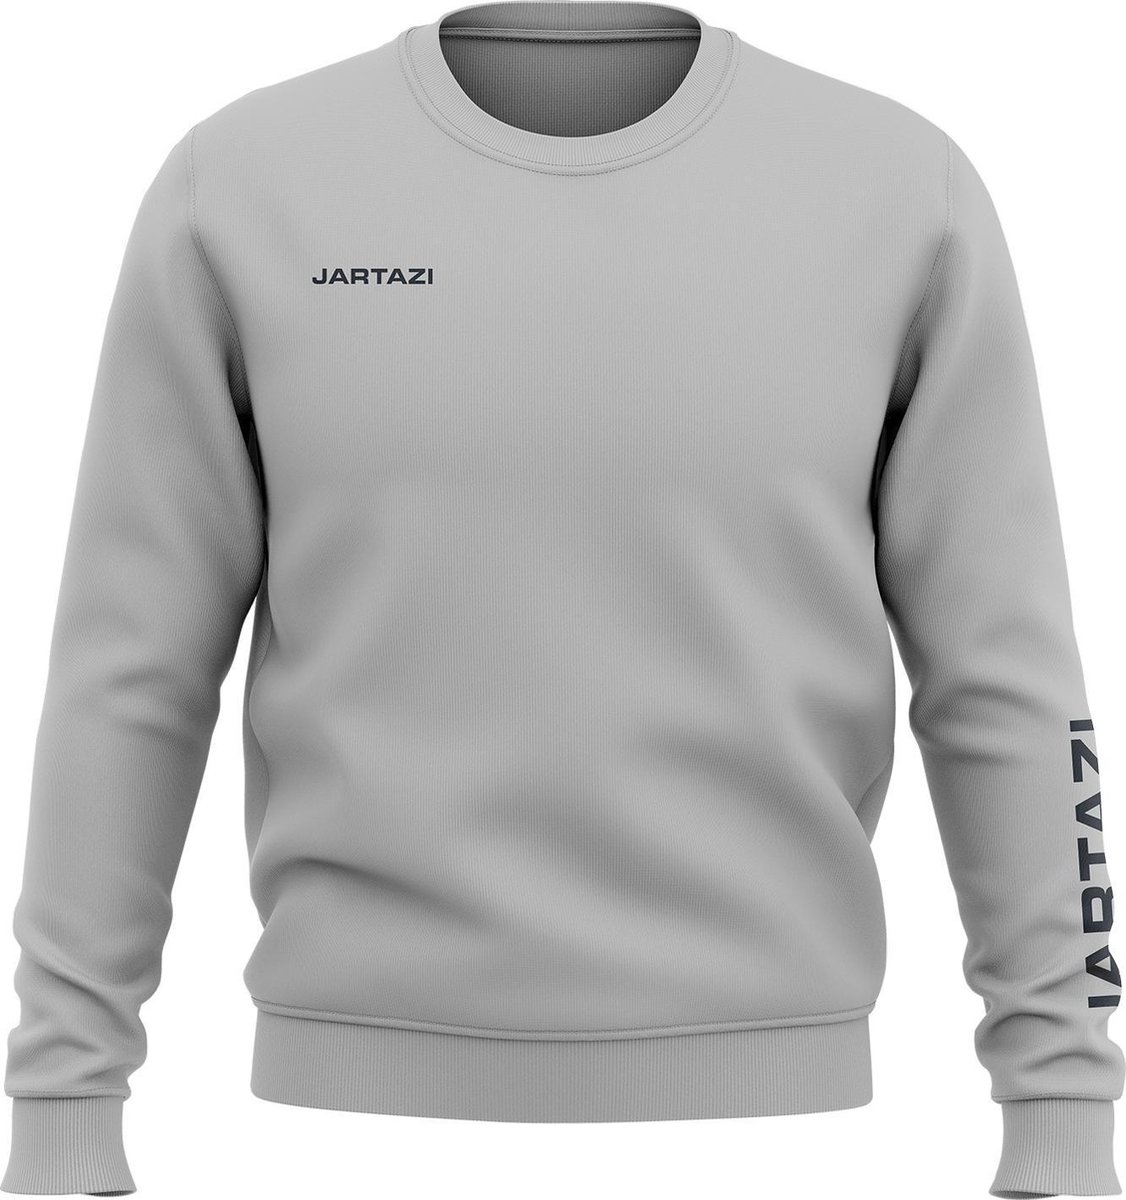 Jartazi Sweater Premium Crewneck Katoen/polyester Grijs Maat Xxl